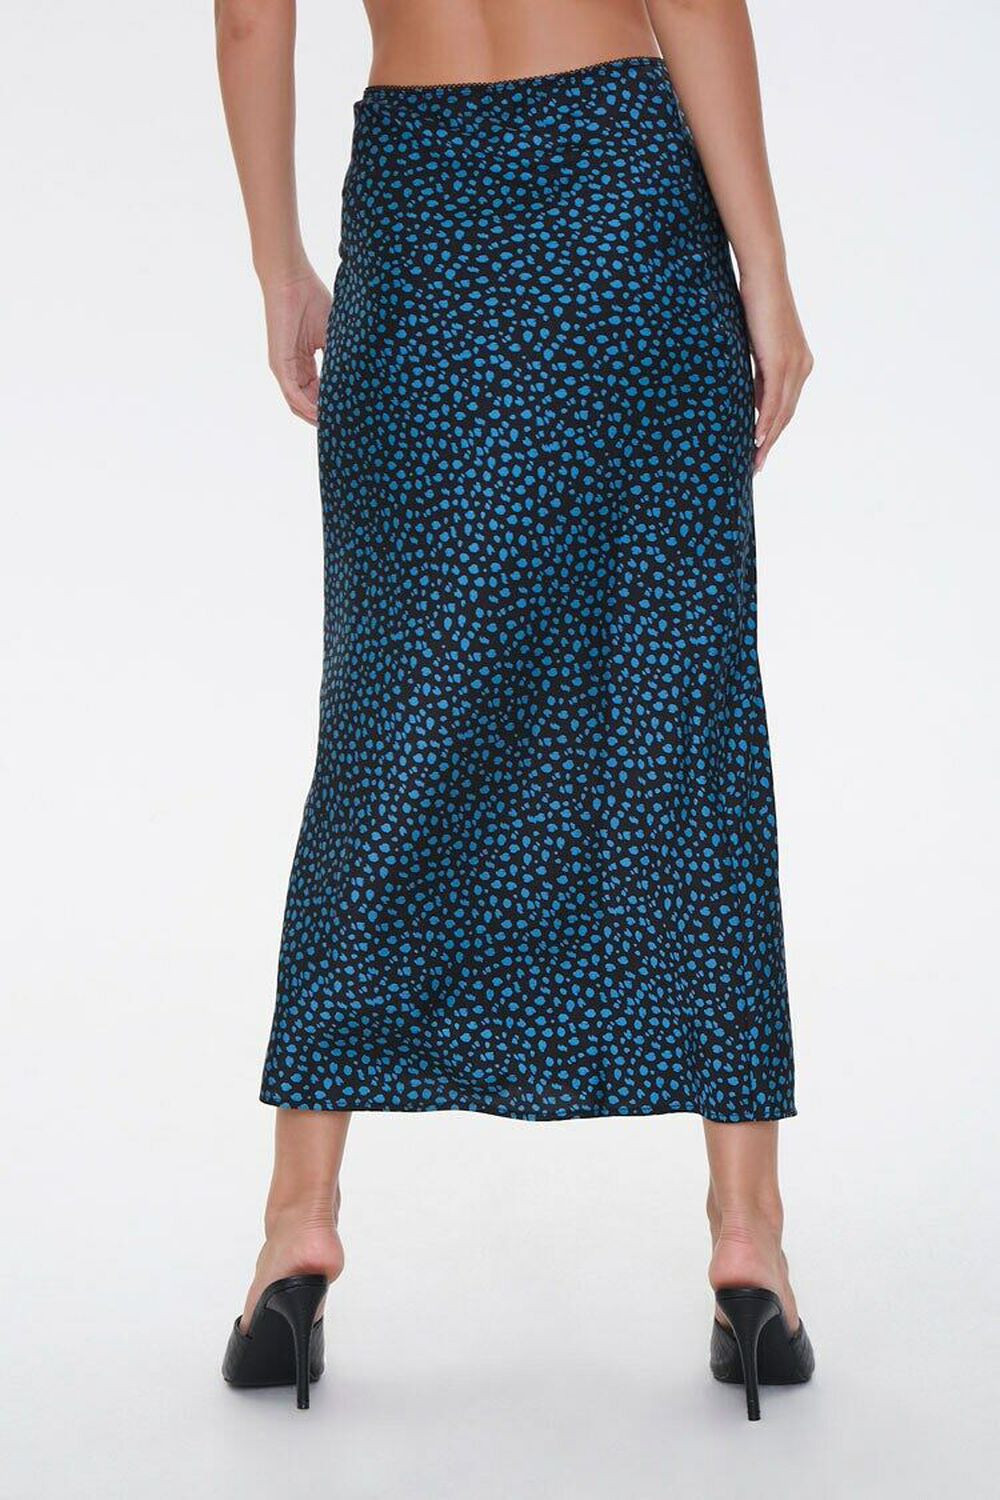 BLACK/TEAL Satin Spotted Print Skirt, image 3